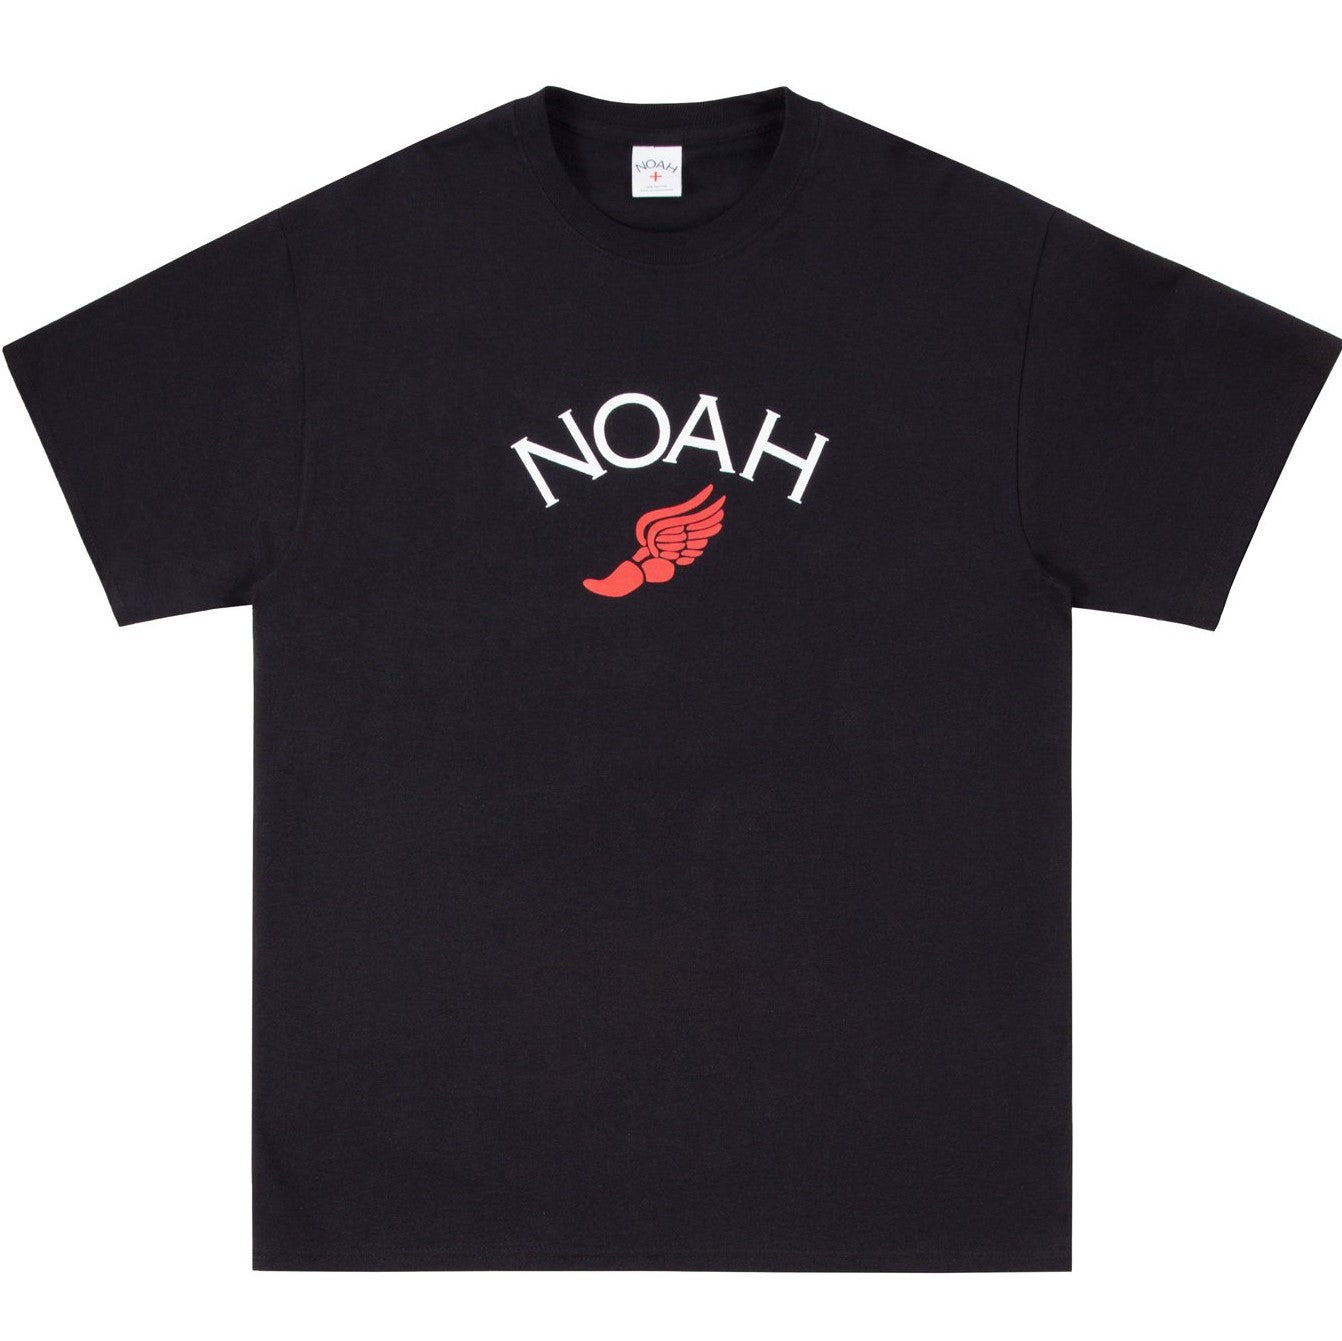 Noah Winged Foot Logo Tee - Black